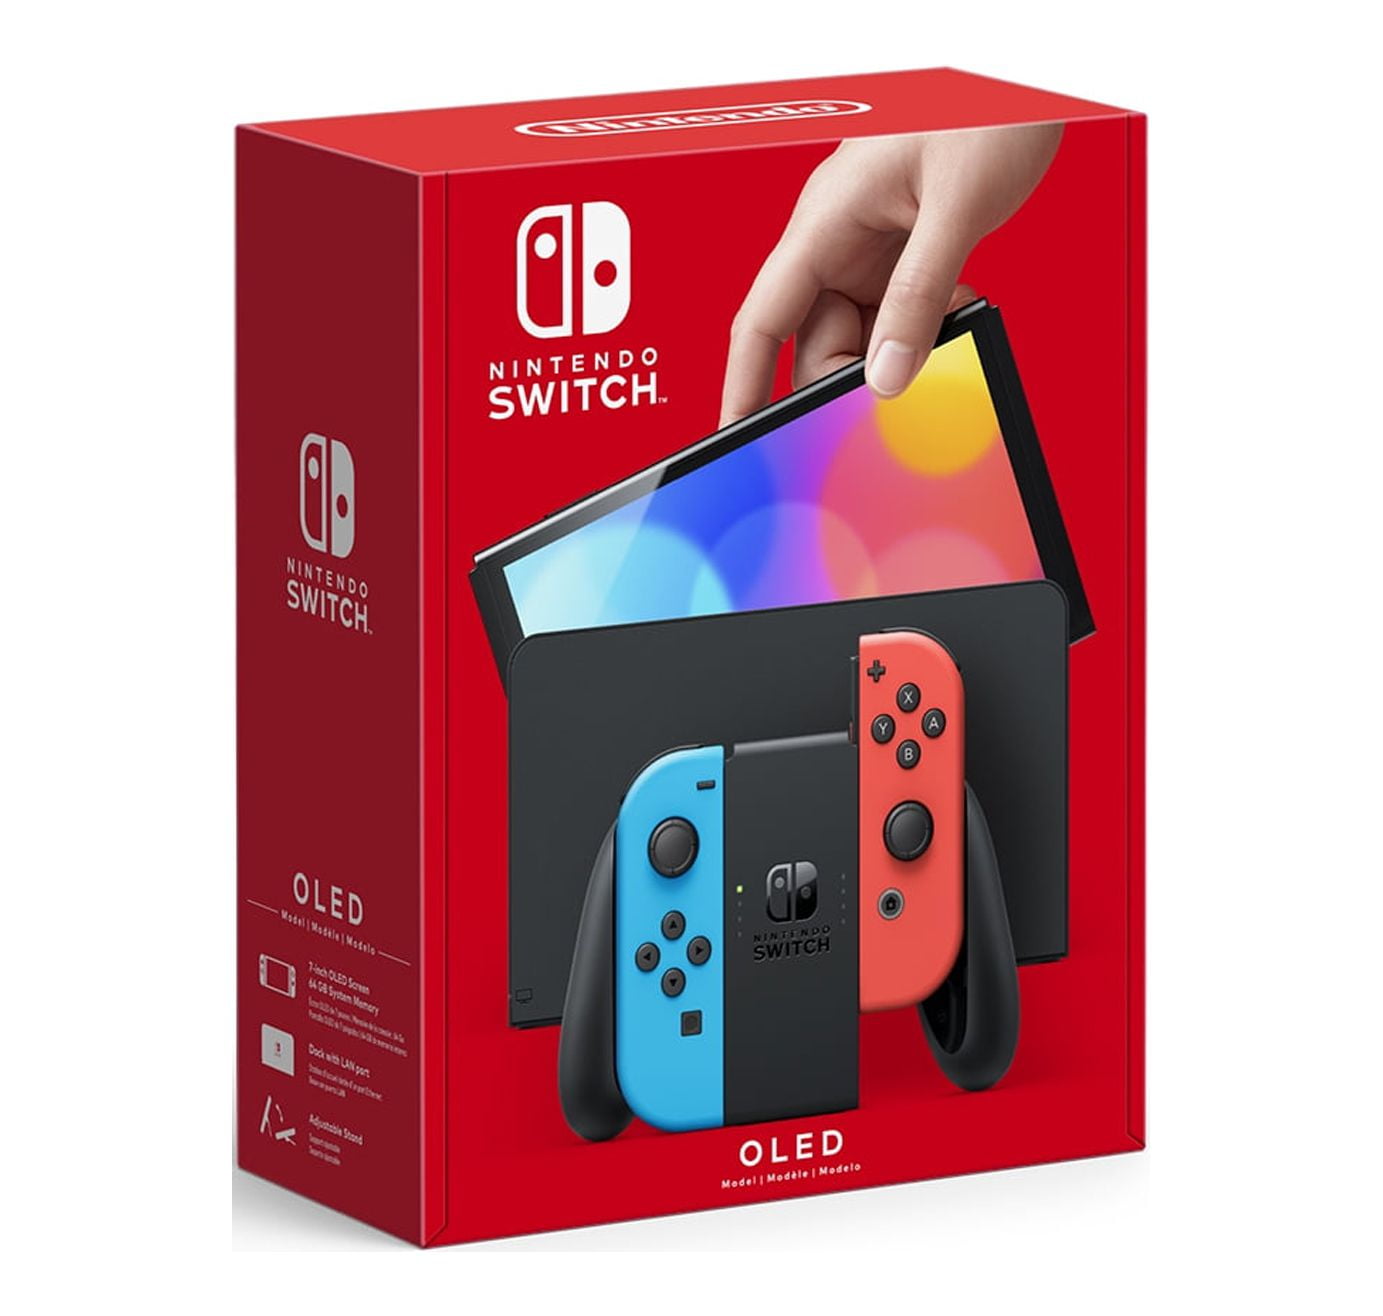 Nintendo Switch™ Sports pour Nintendo Switch - Site officiel Nintendo